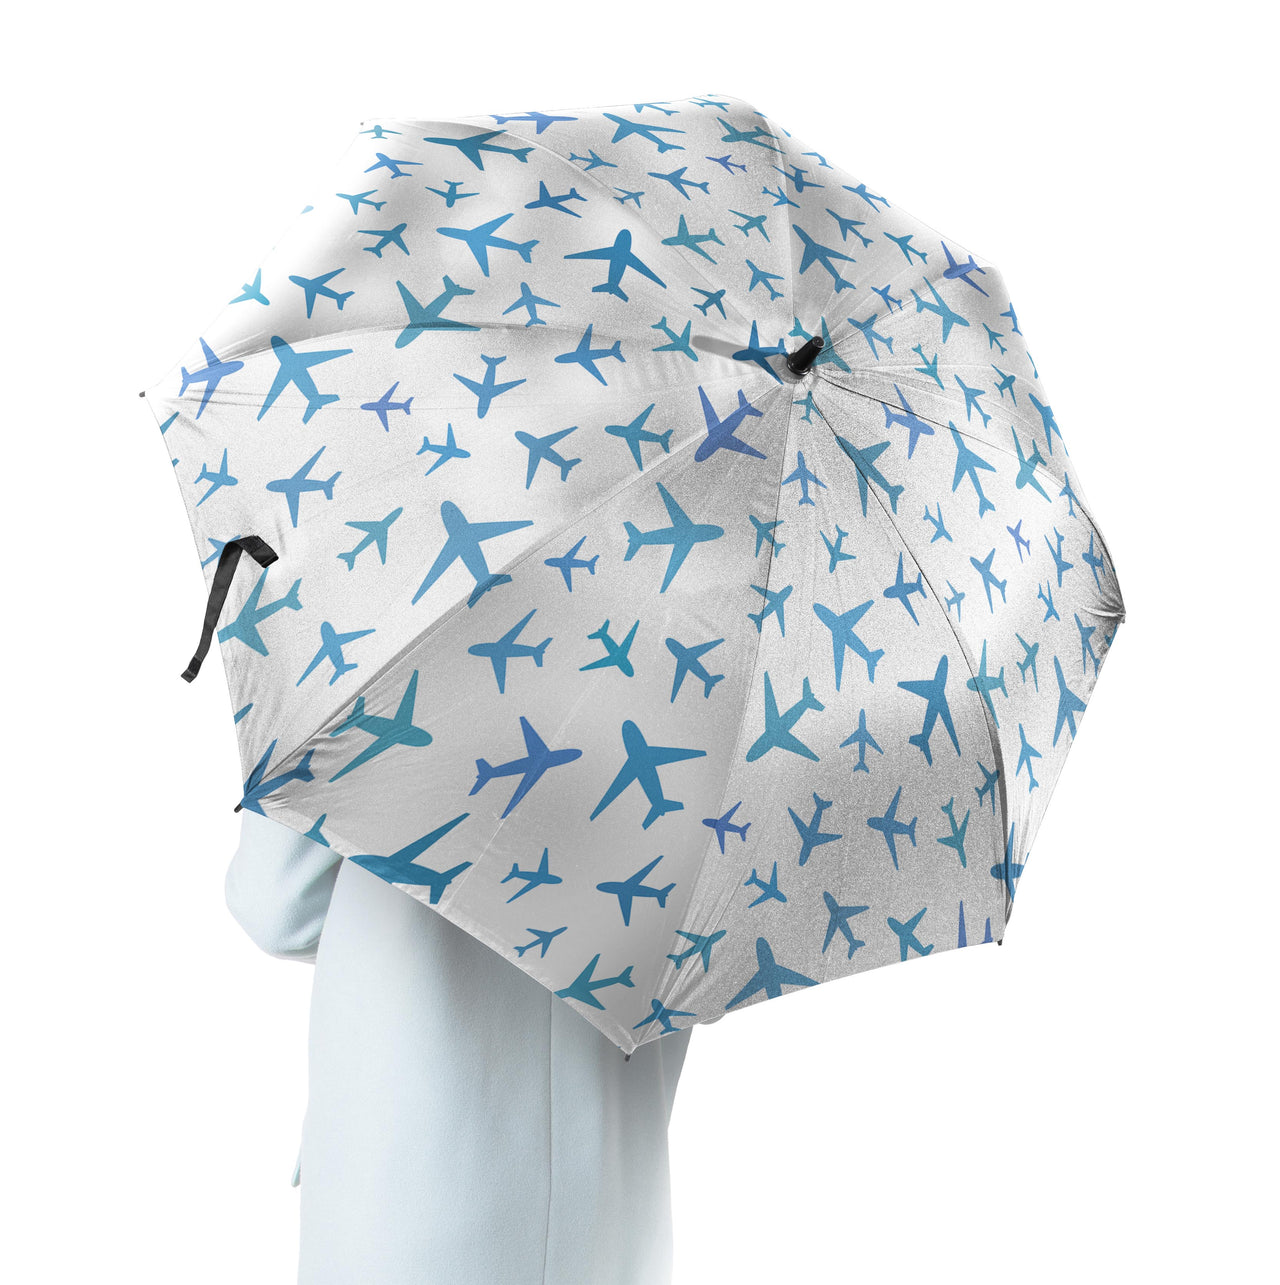 Many Airplanes Designed Umbrella